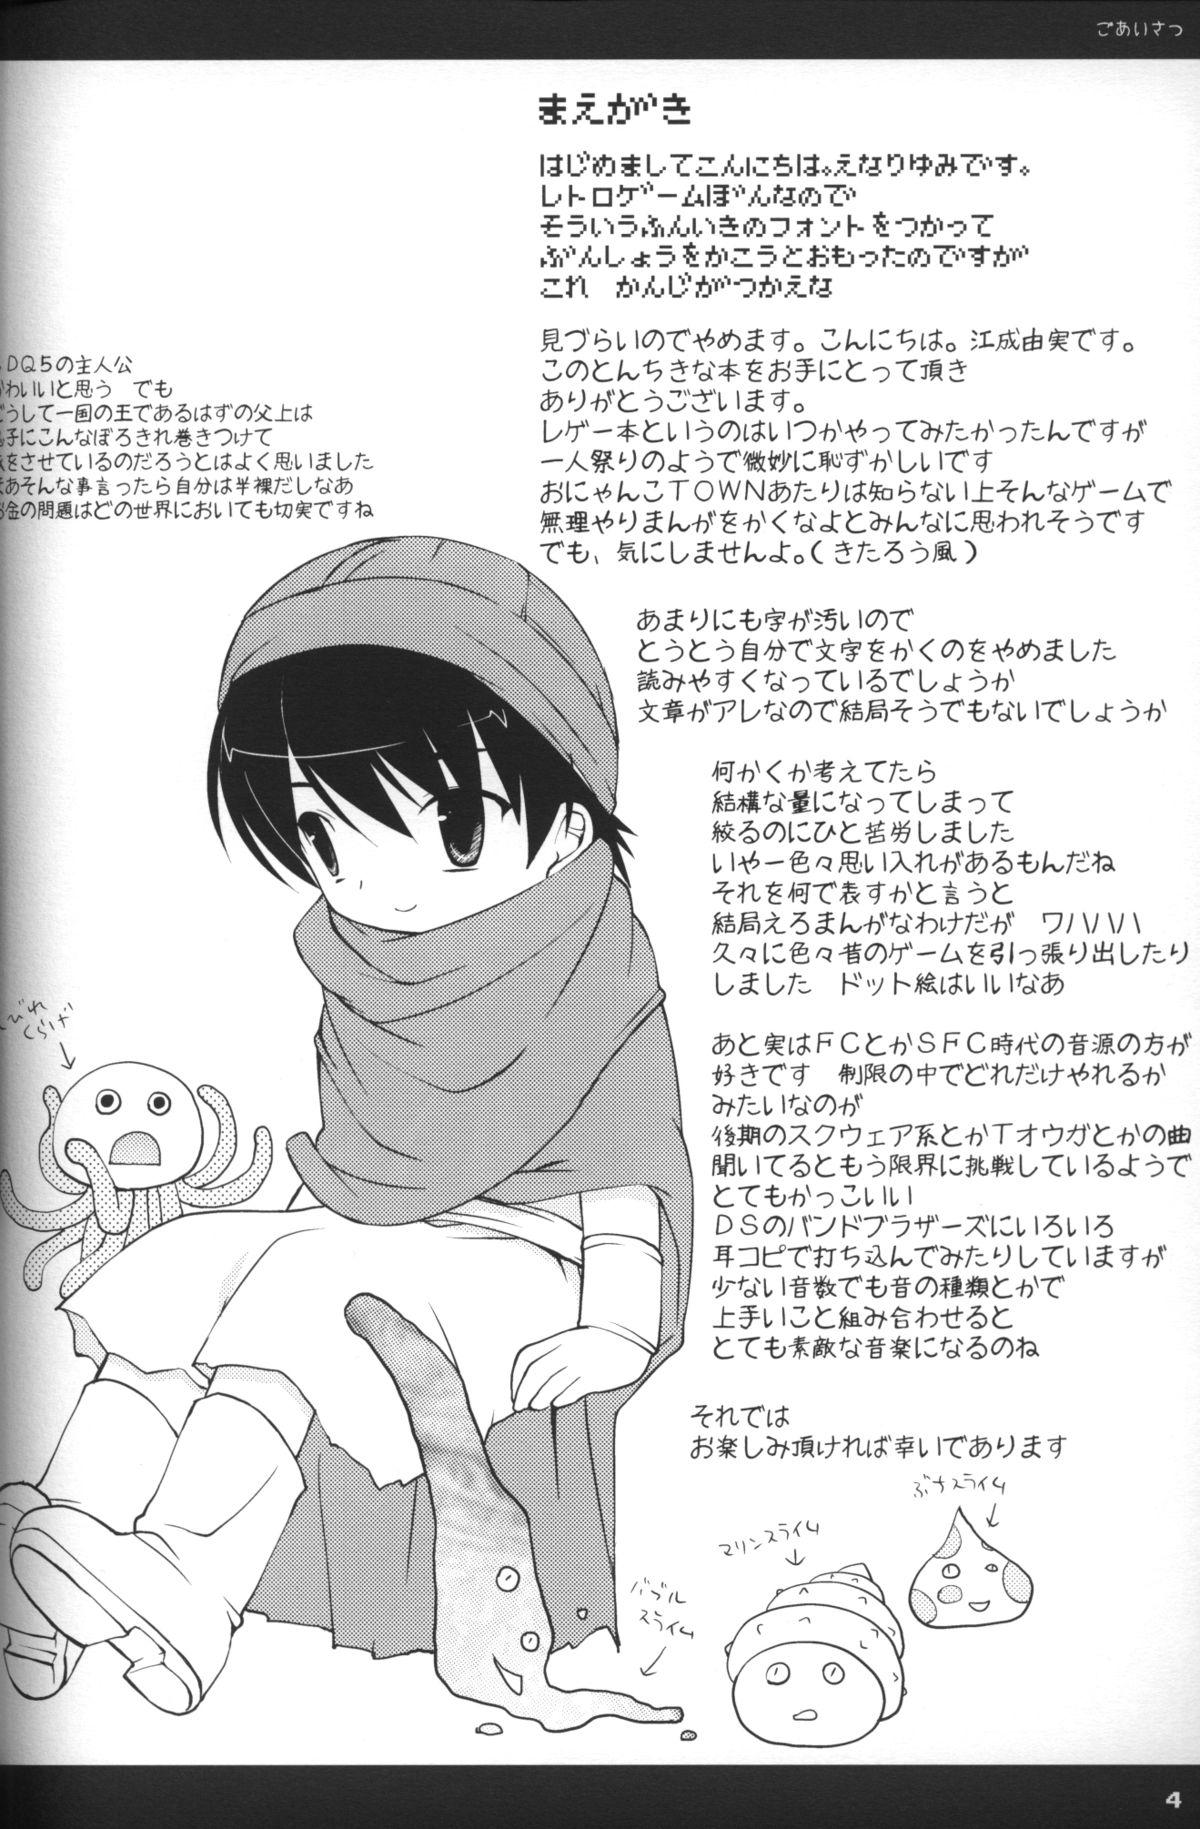 Rakuji Rekitei - Retro Game Only Fan Book 2